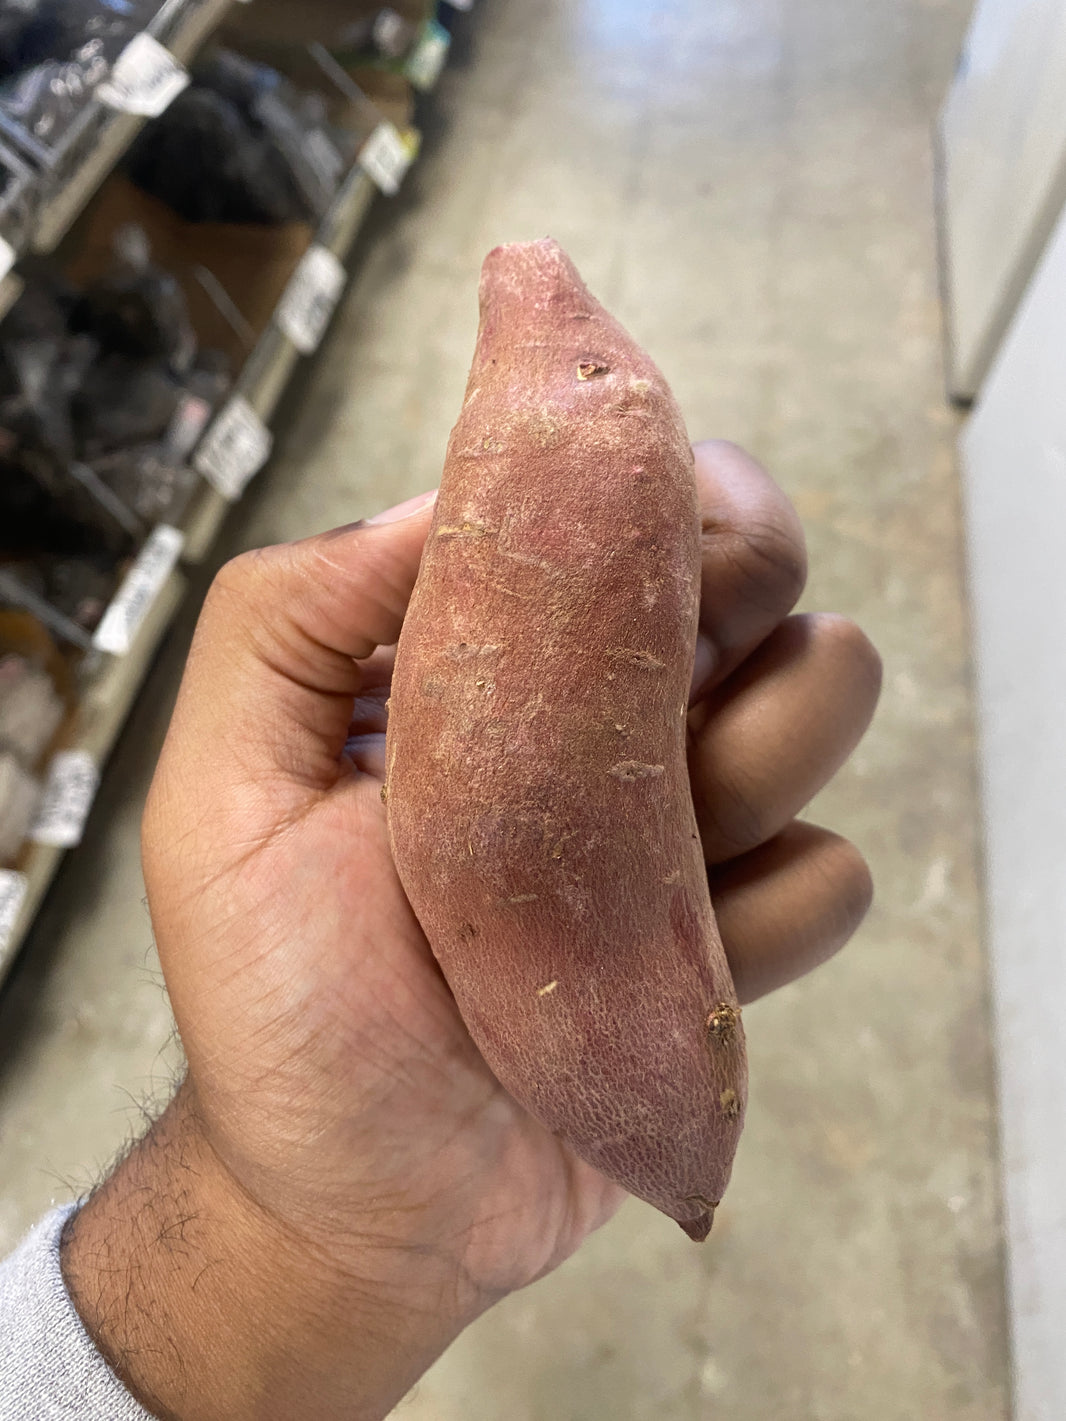 Sweet Potatoes( per pound) - African Caribbean Seafood Market